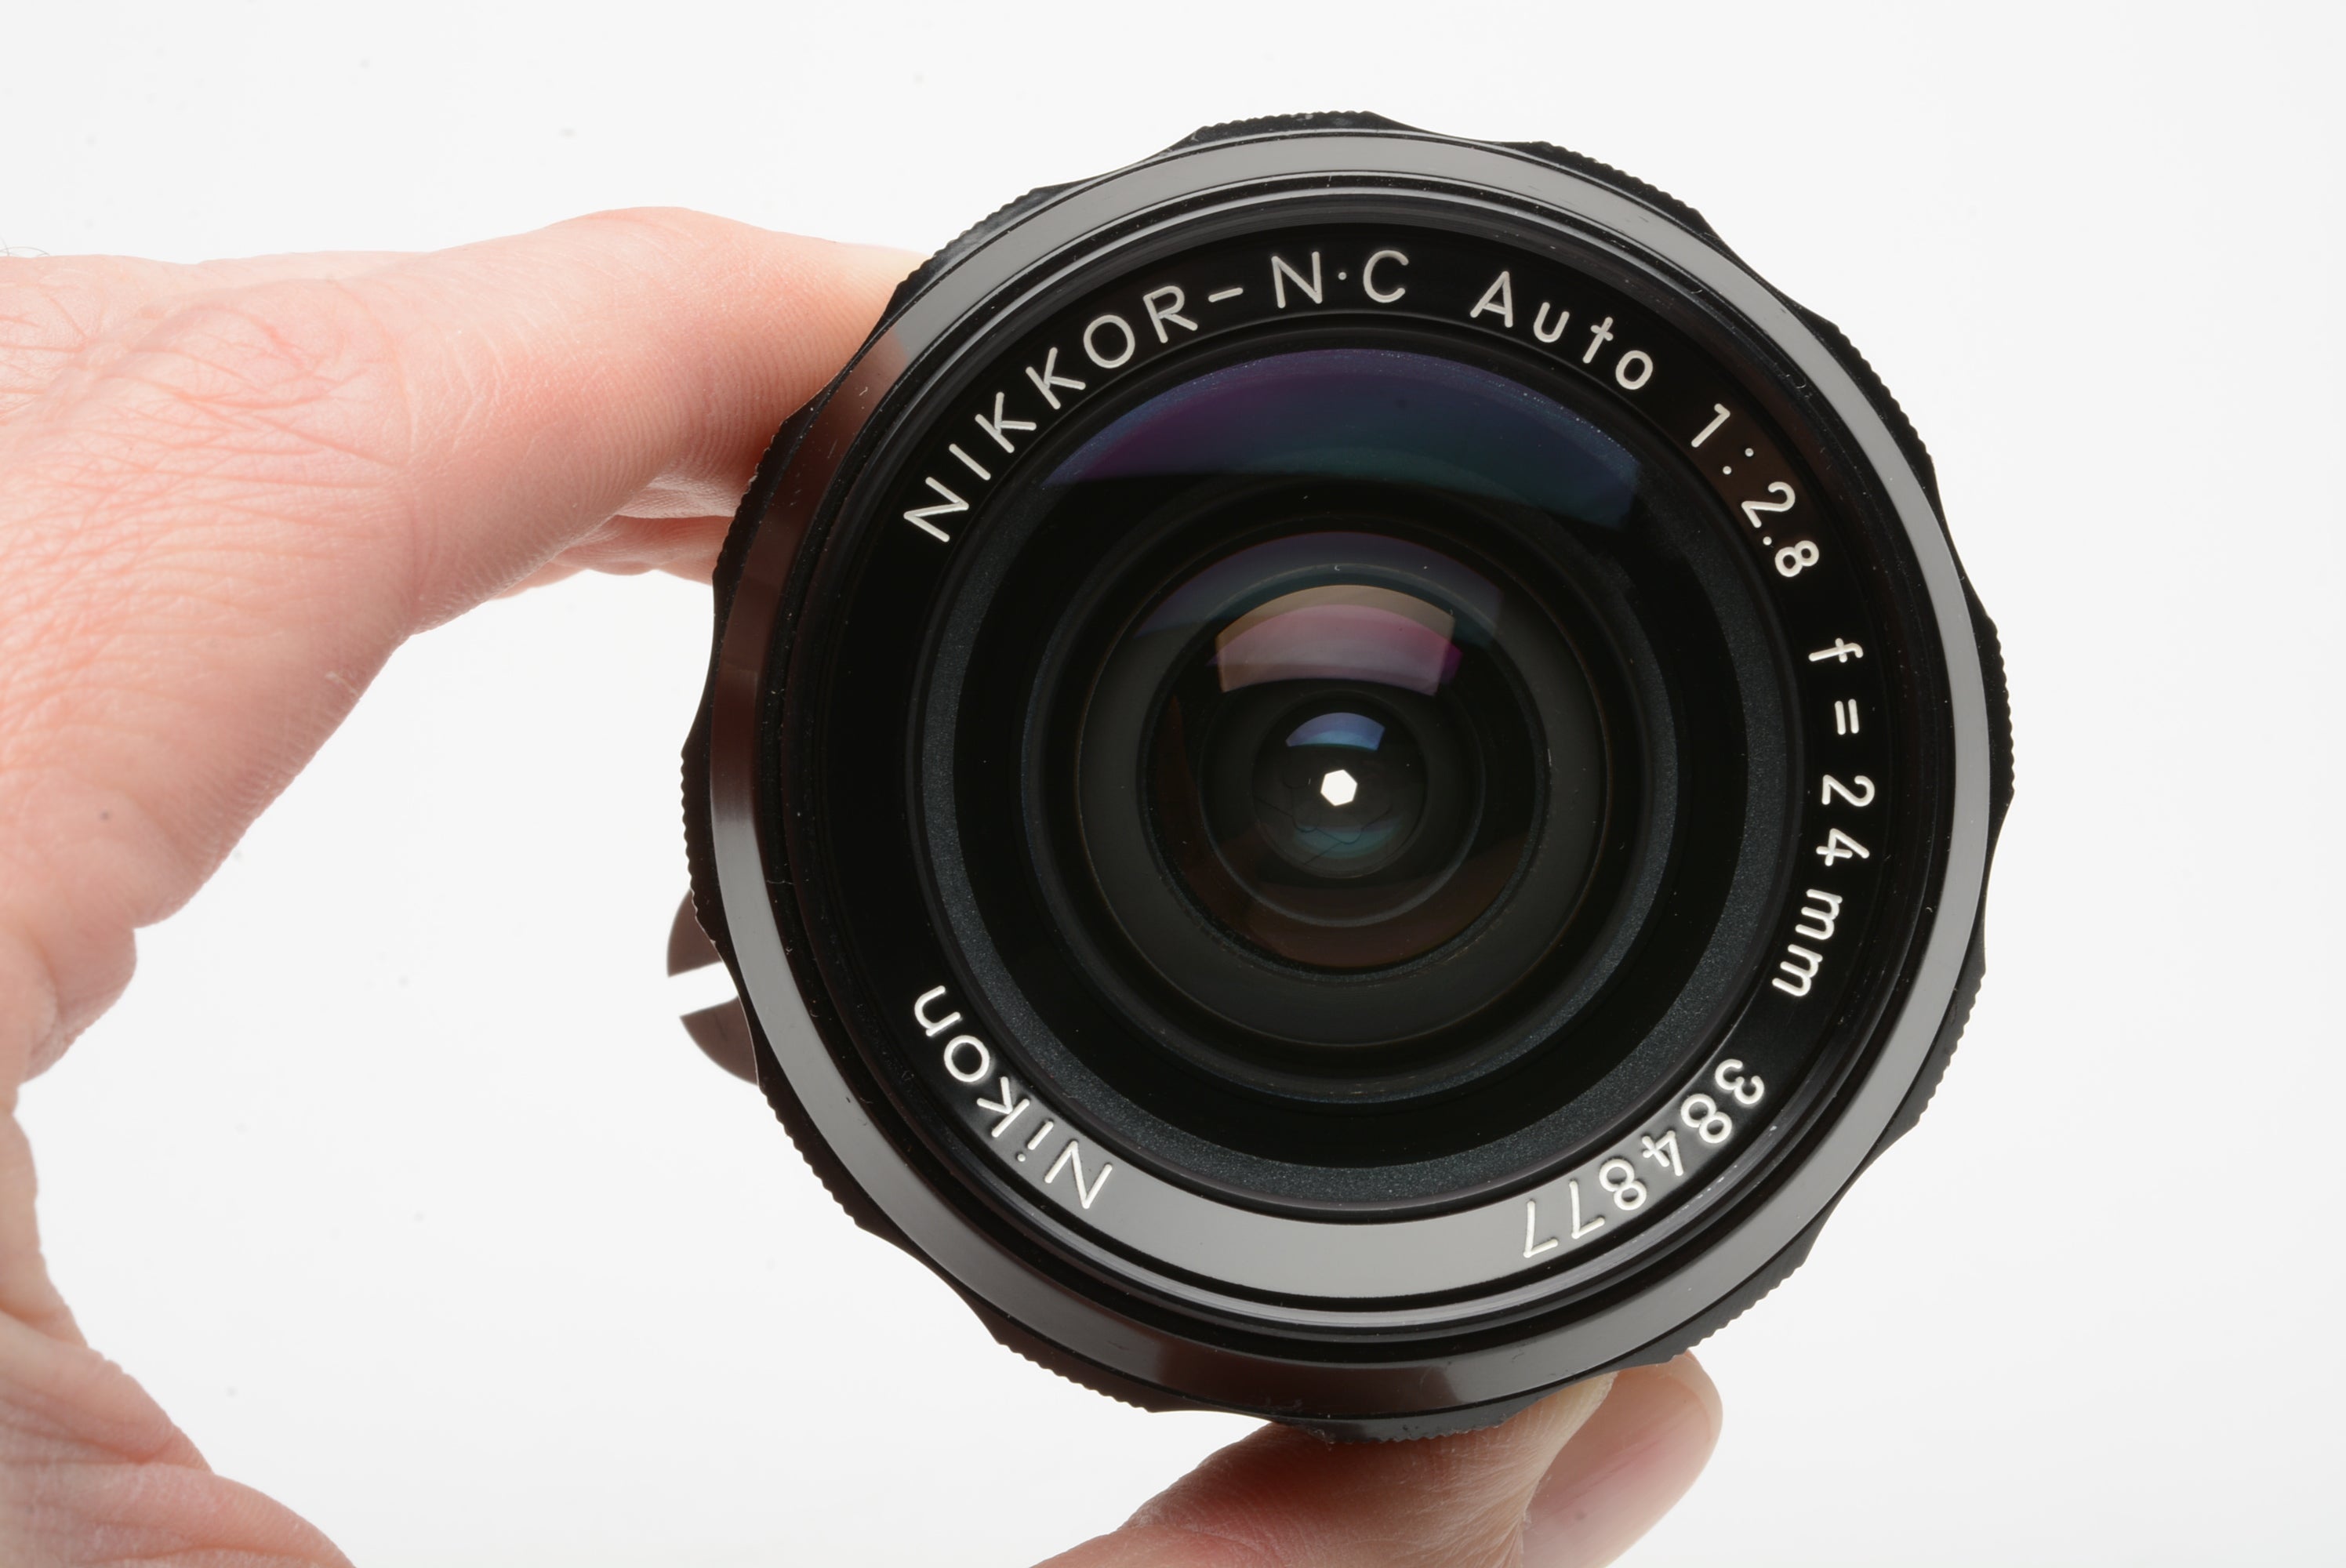 Nikon Nikkor-N.C 24mm f2.8 wide angle lens Nikon Non-AI mount ...